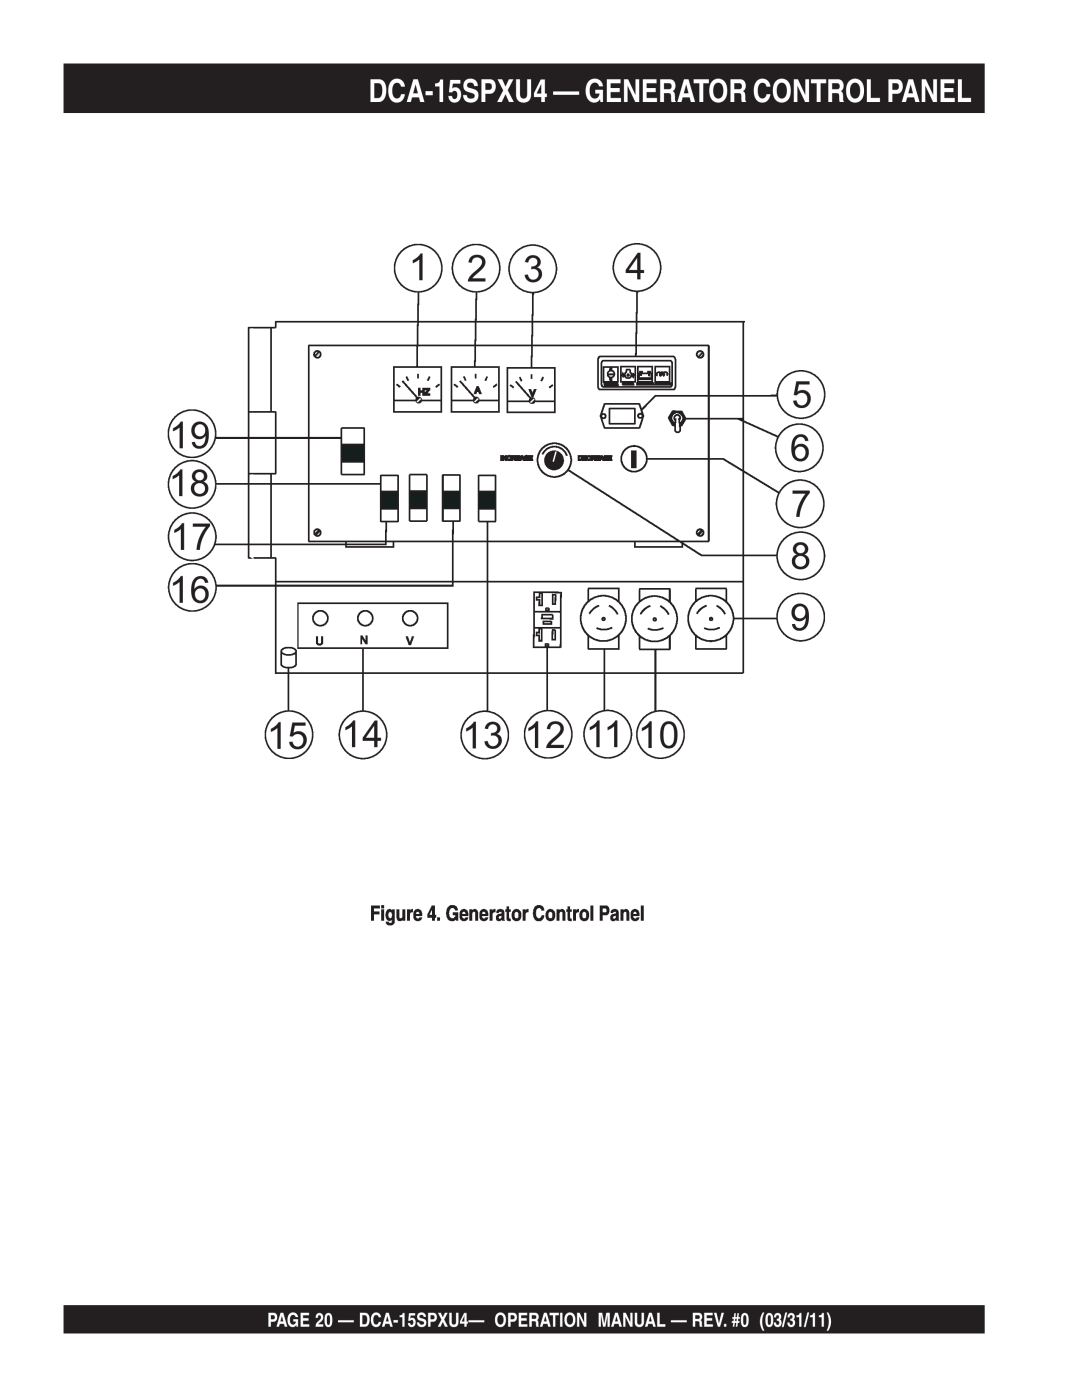 Multiquip operation manual DCA-15SPXU4- GENERATOR CONTROL PANEL, Generator Control Panel 